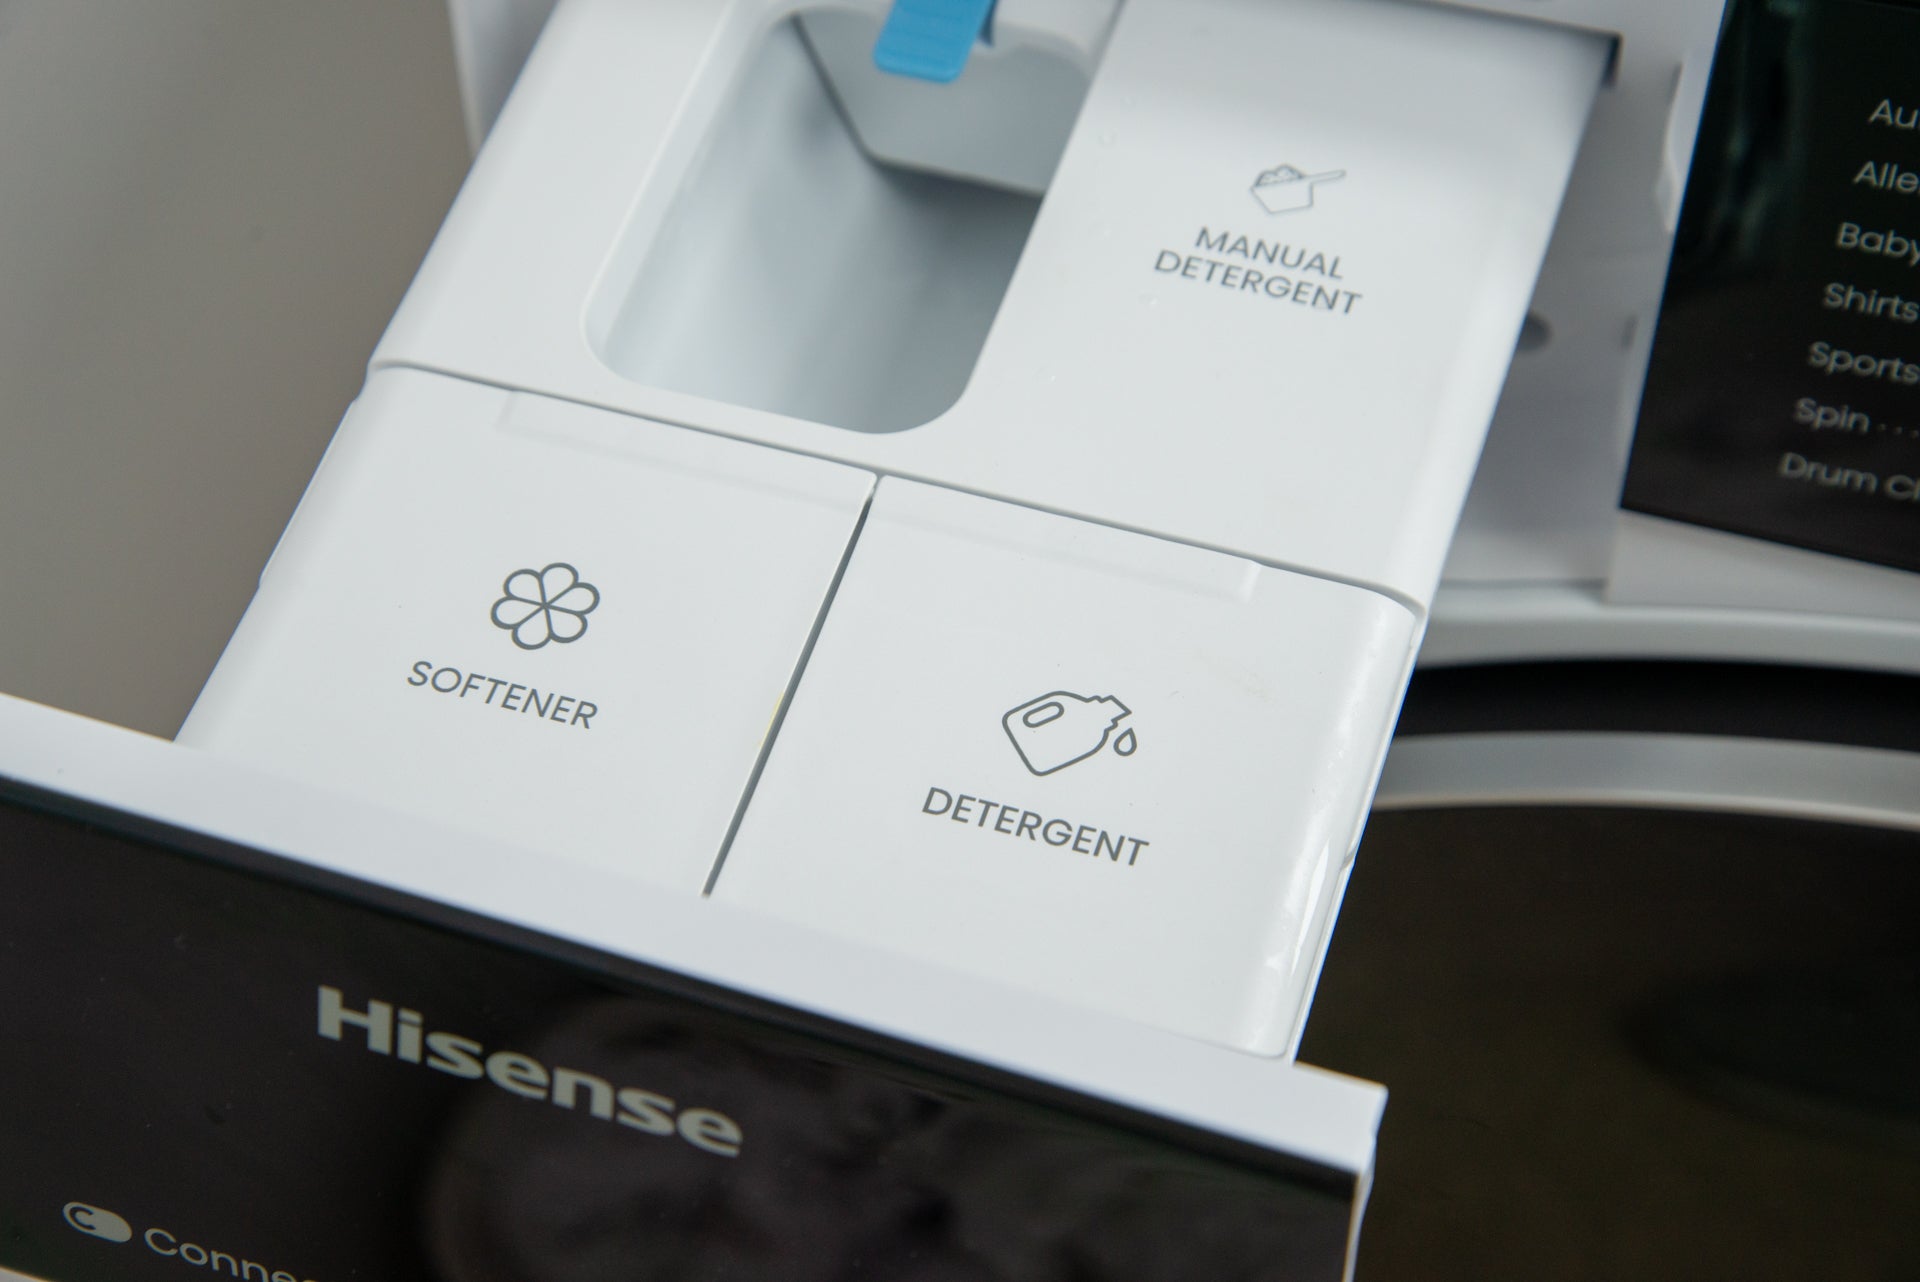 Hisense WF5S1045BW detergent drawer